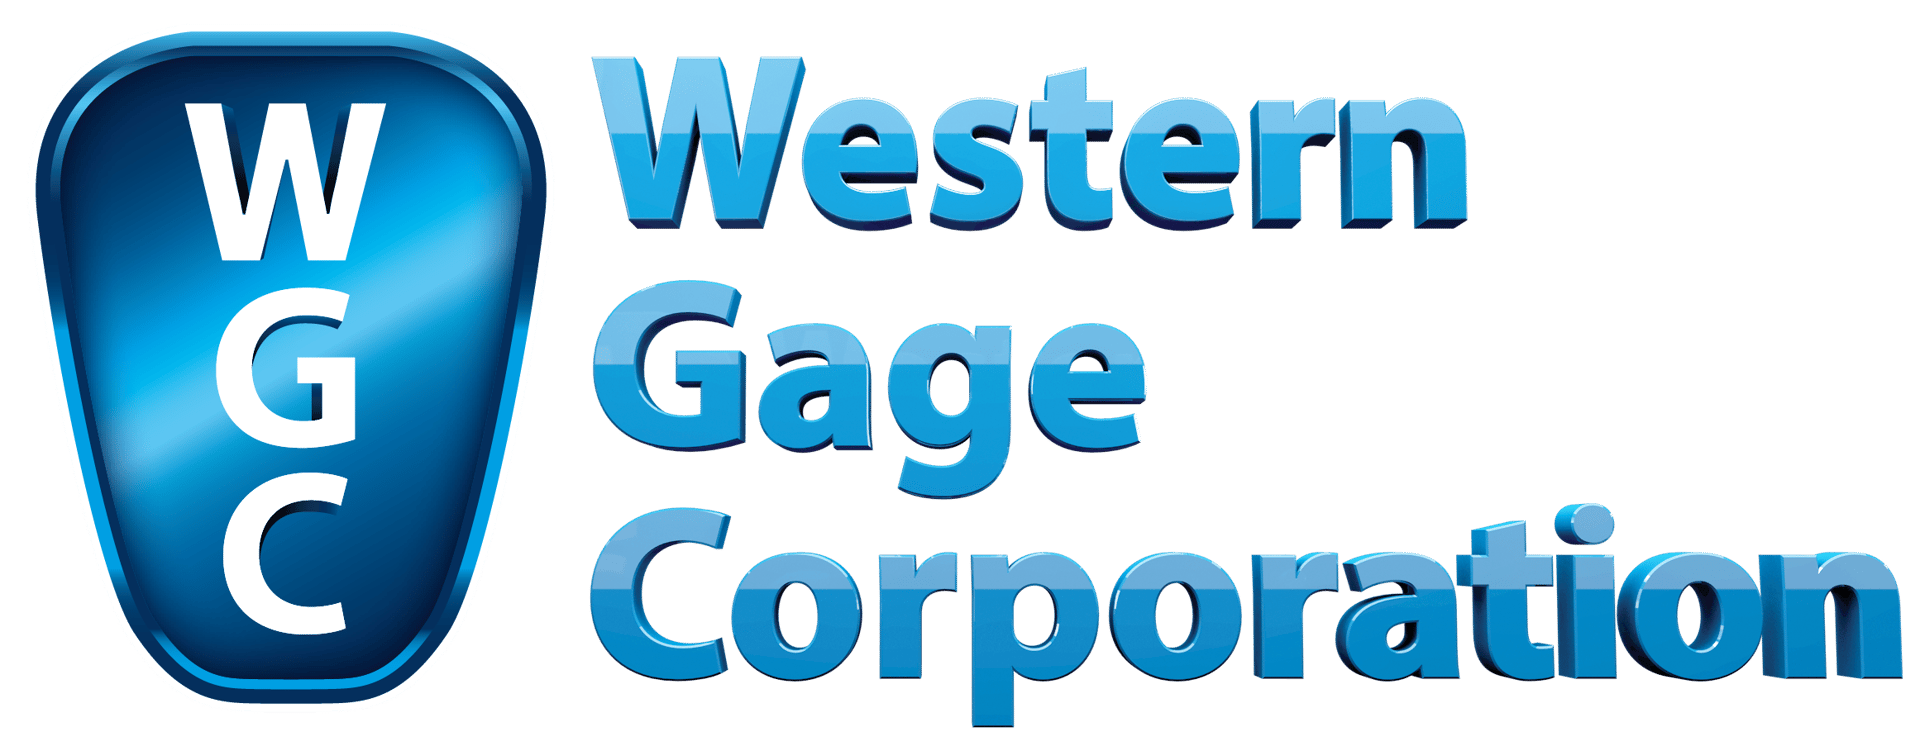 Western Gage Corporation